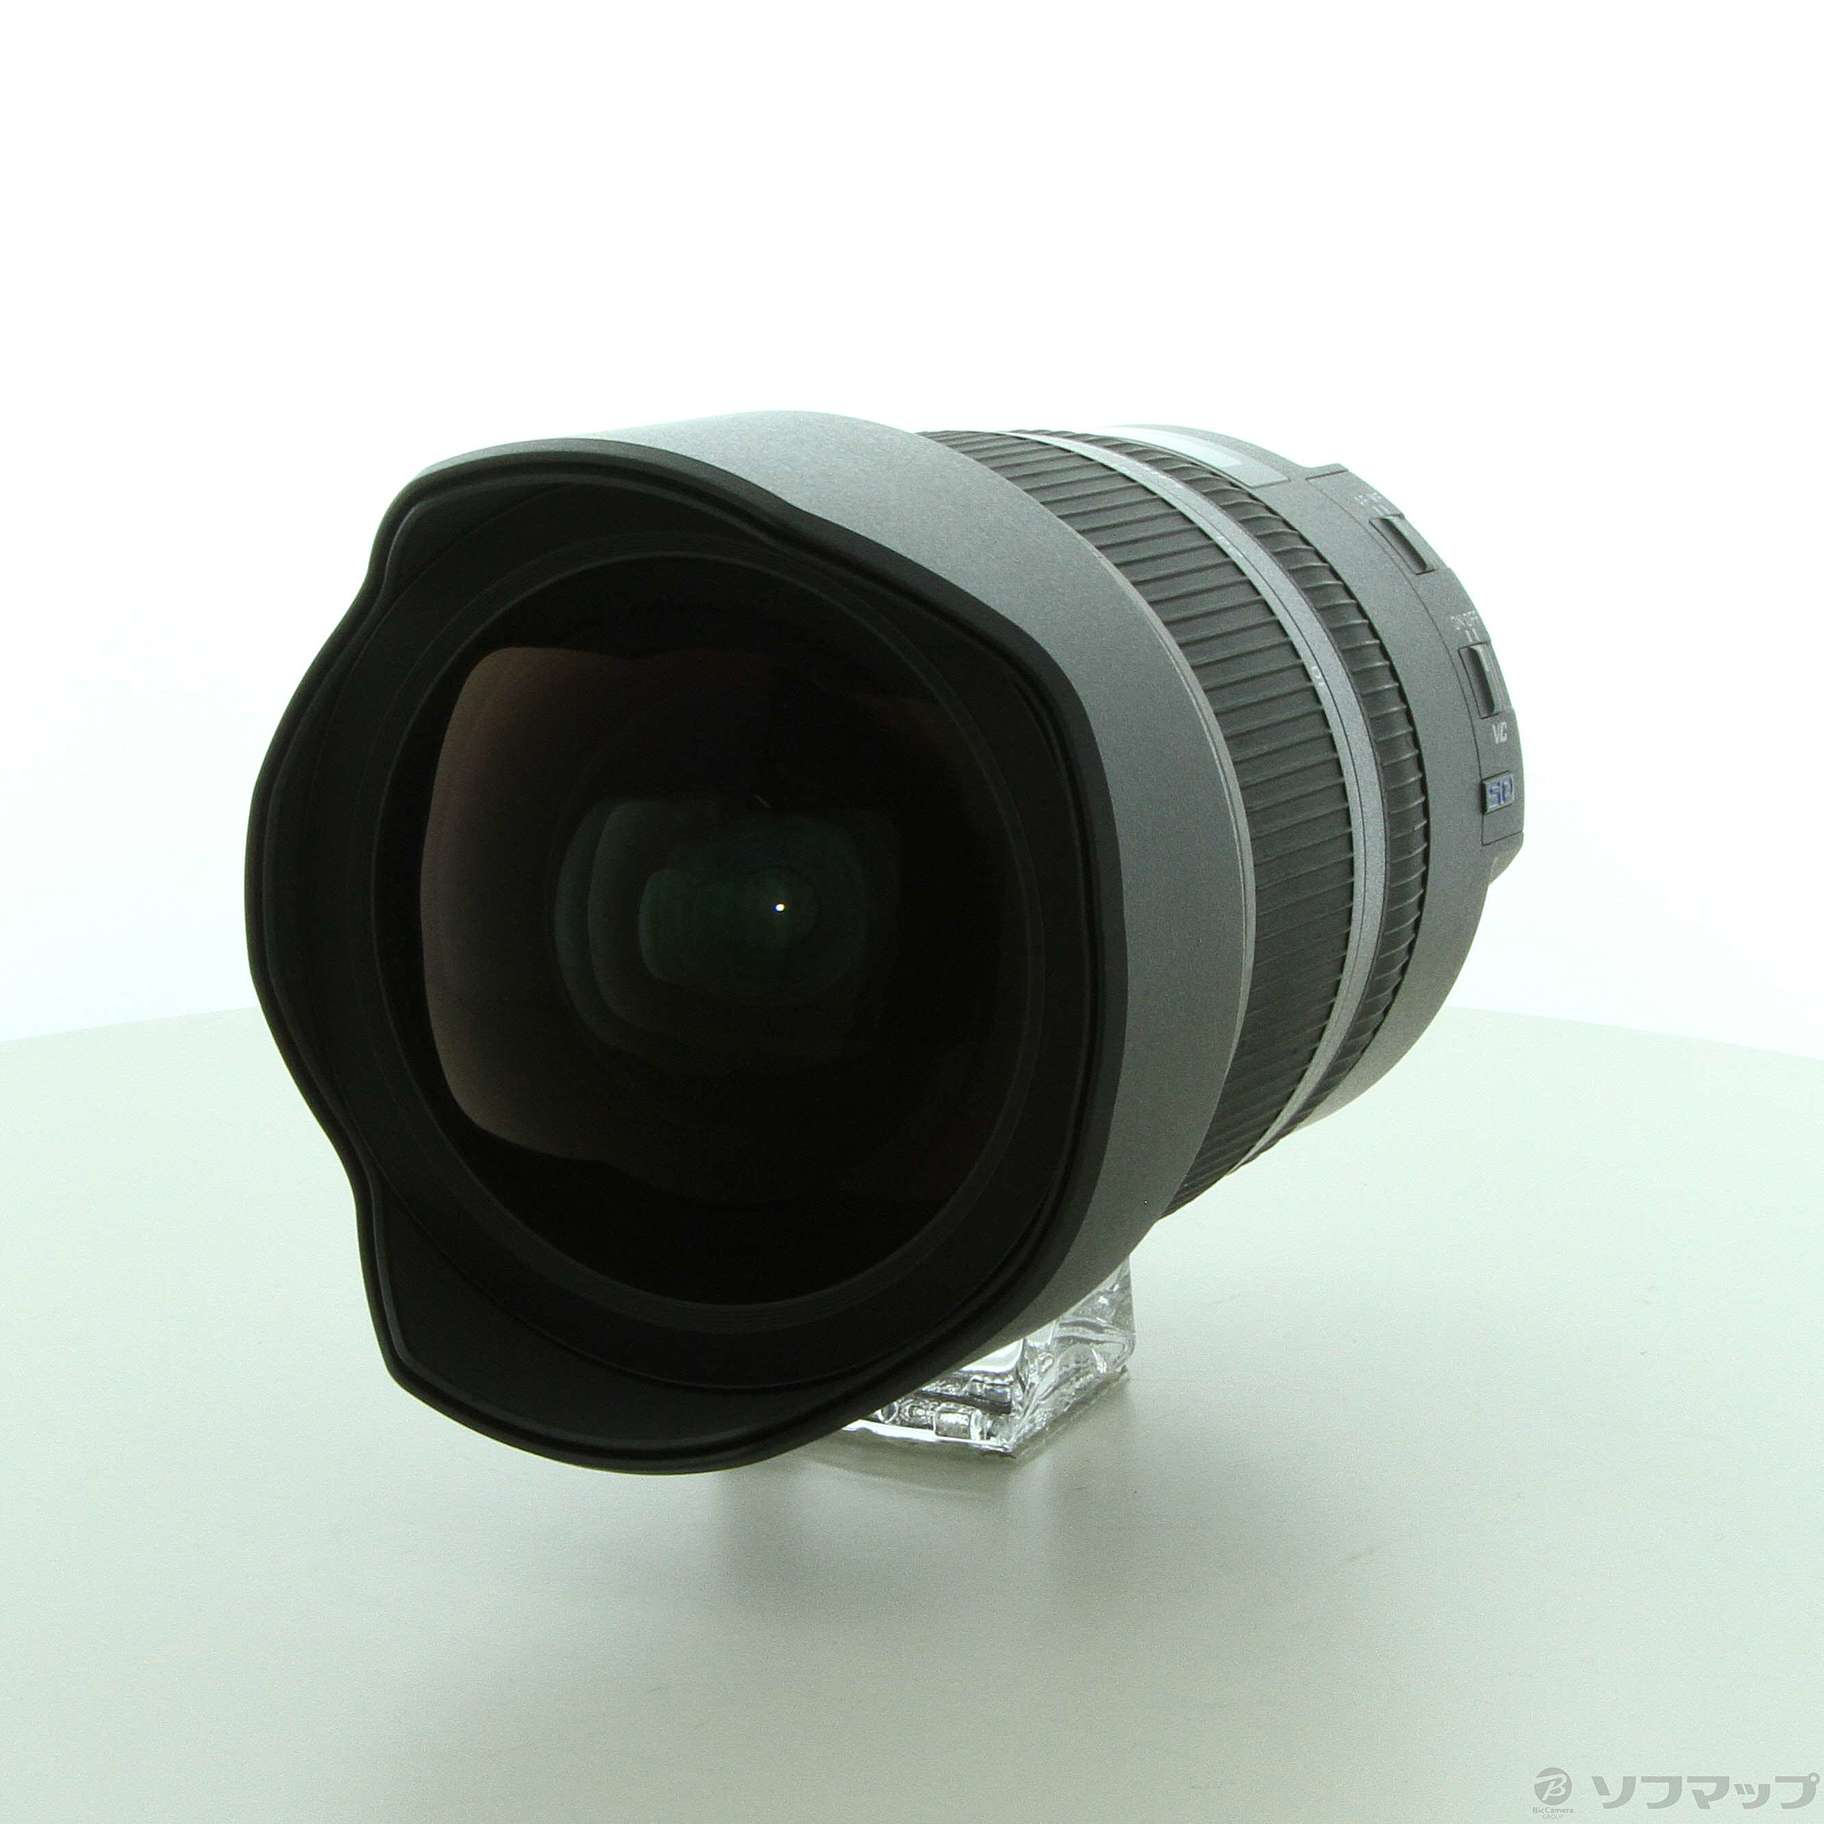 TAMRON SP 15-30mm F2.8 Di VC USD (A012N) (Nikon用レンズ)